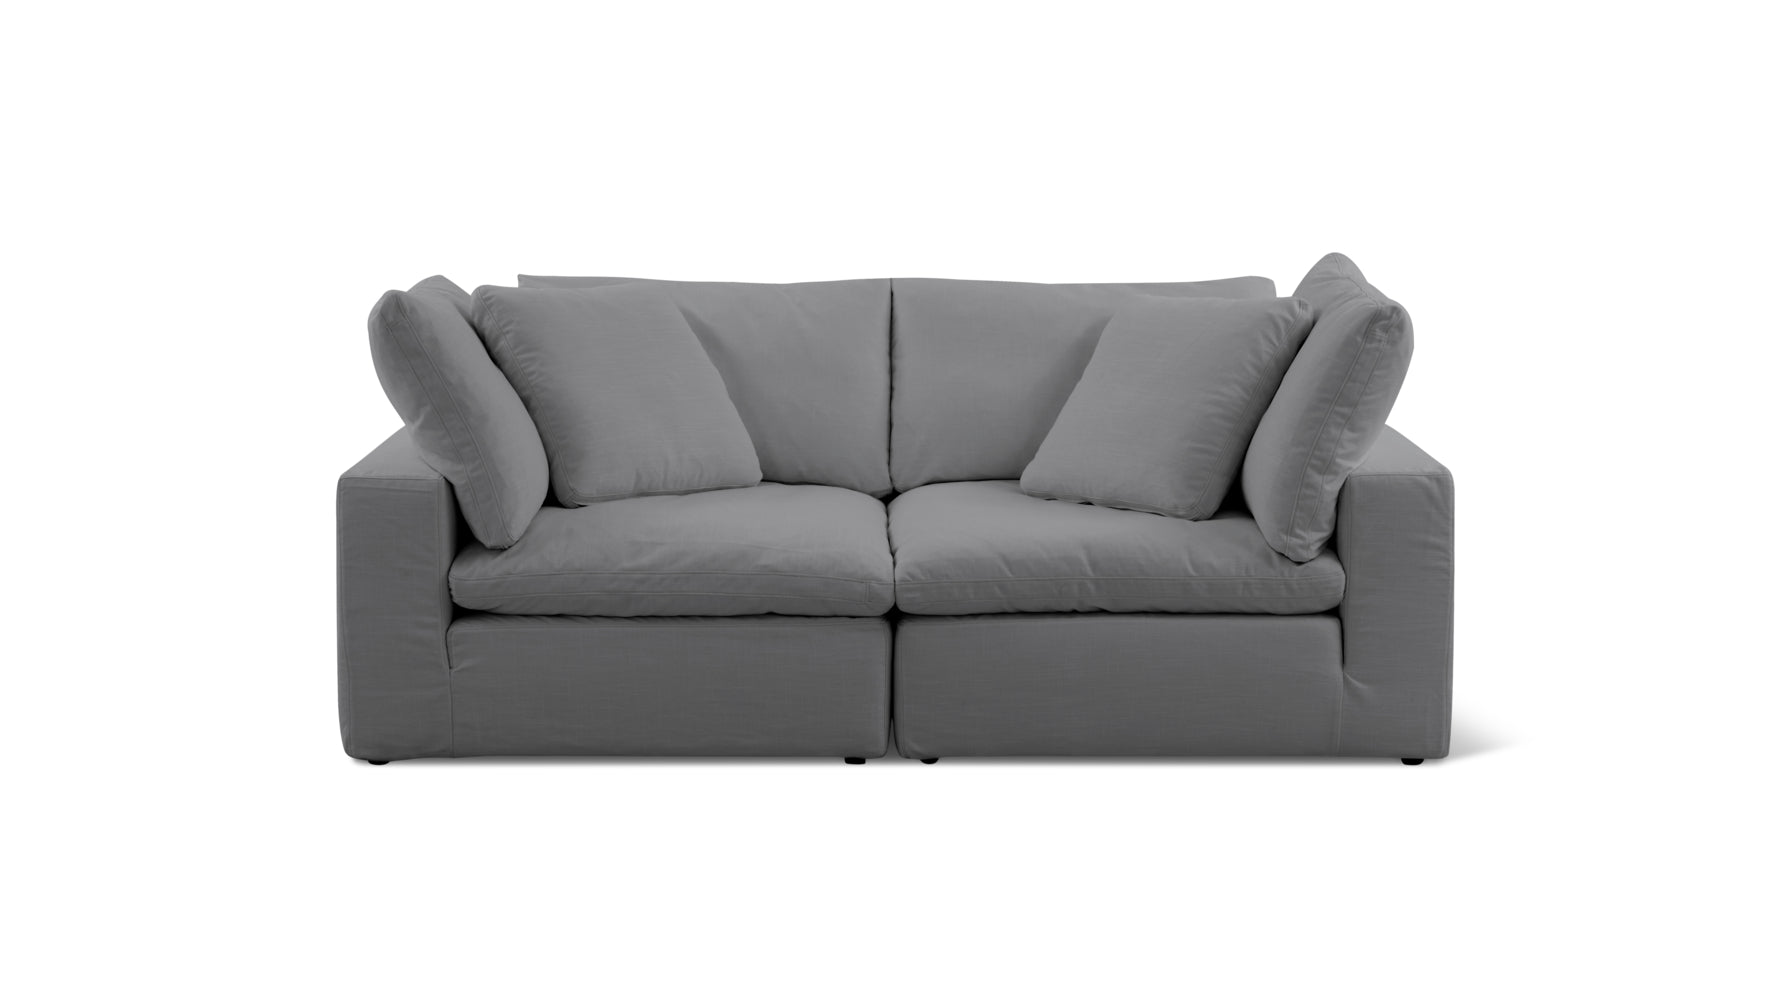 Movie Night™ 2-Piece Modular Sofa, Large, Gentle Rain - Image 1